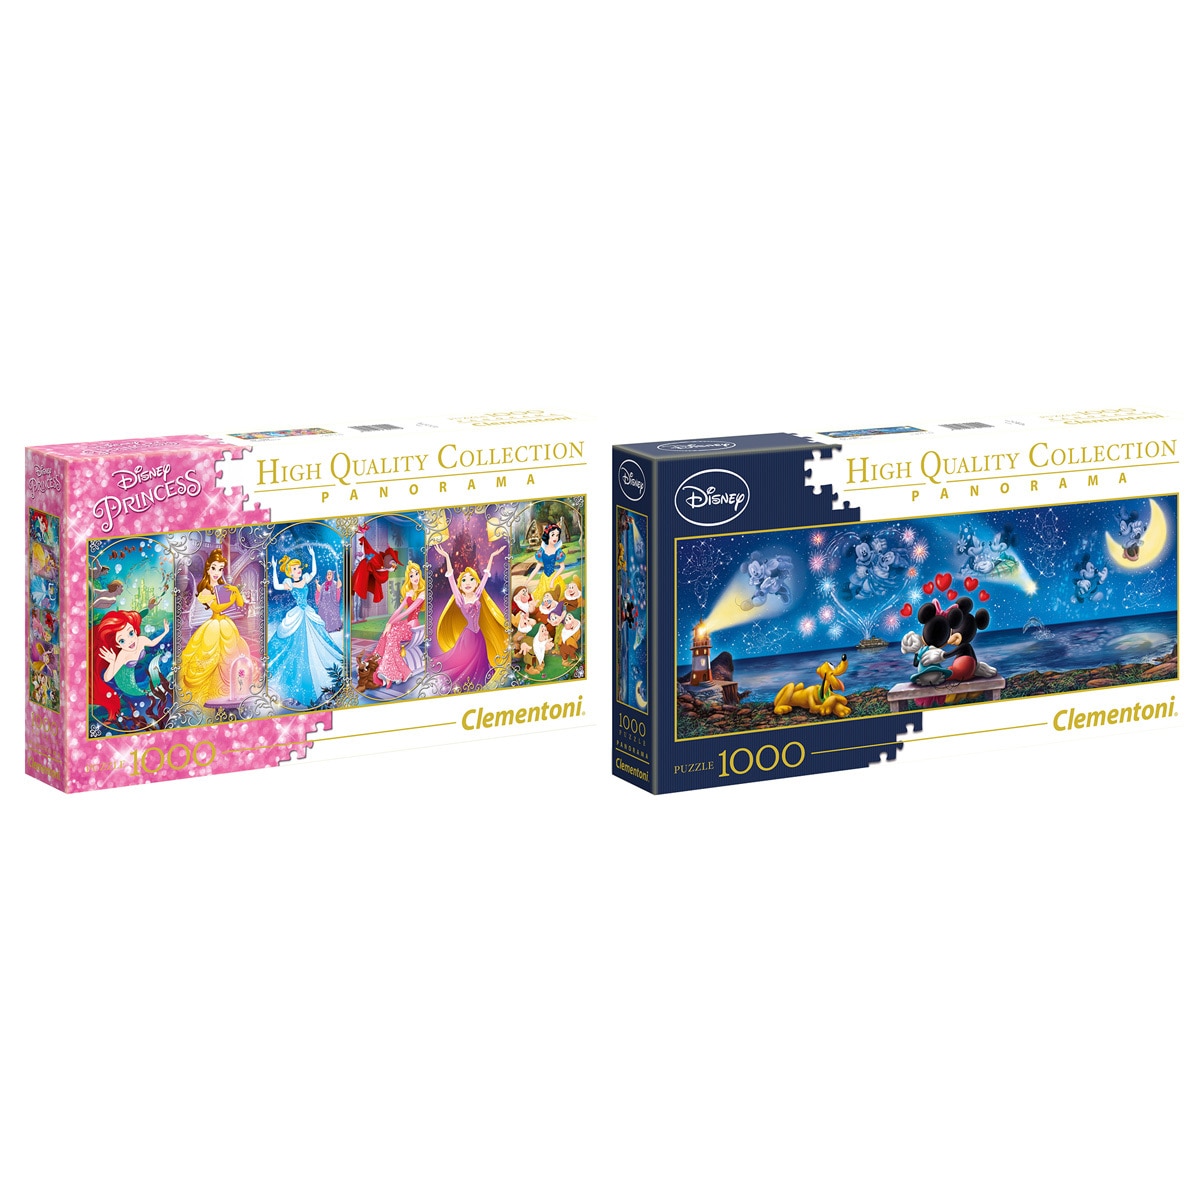 Clementoni 1000pc Disney Collection Puzzles 2 pack